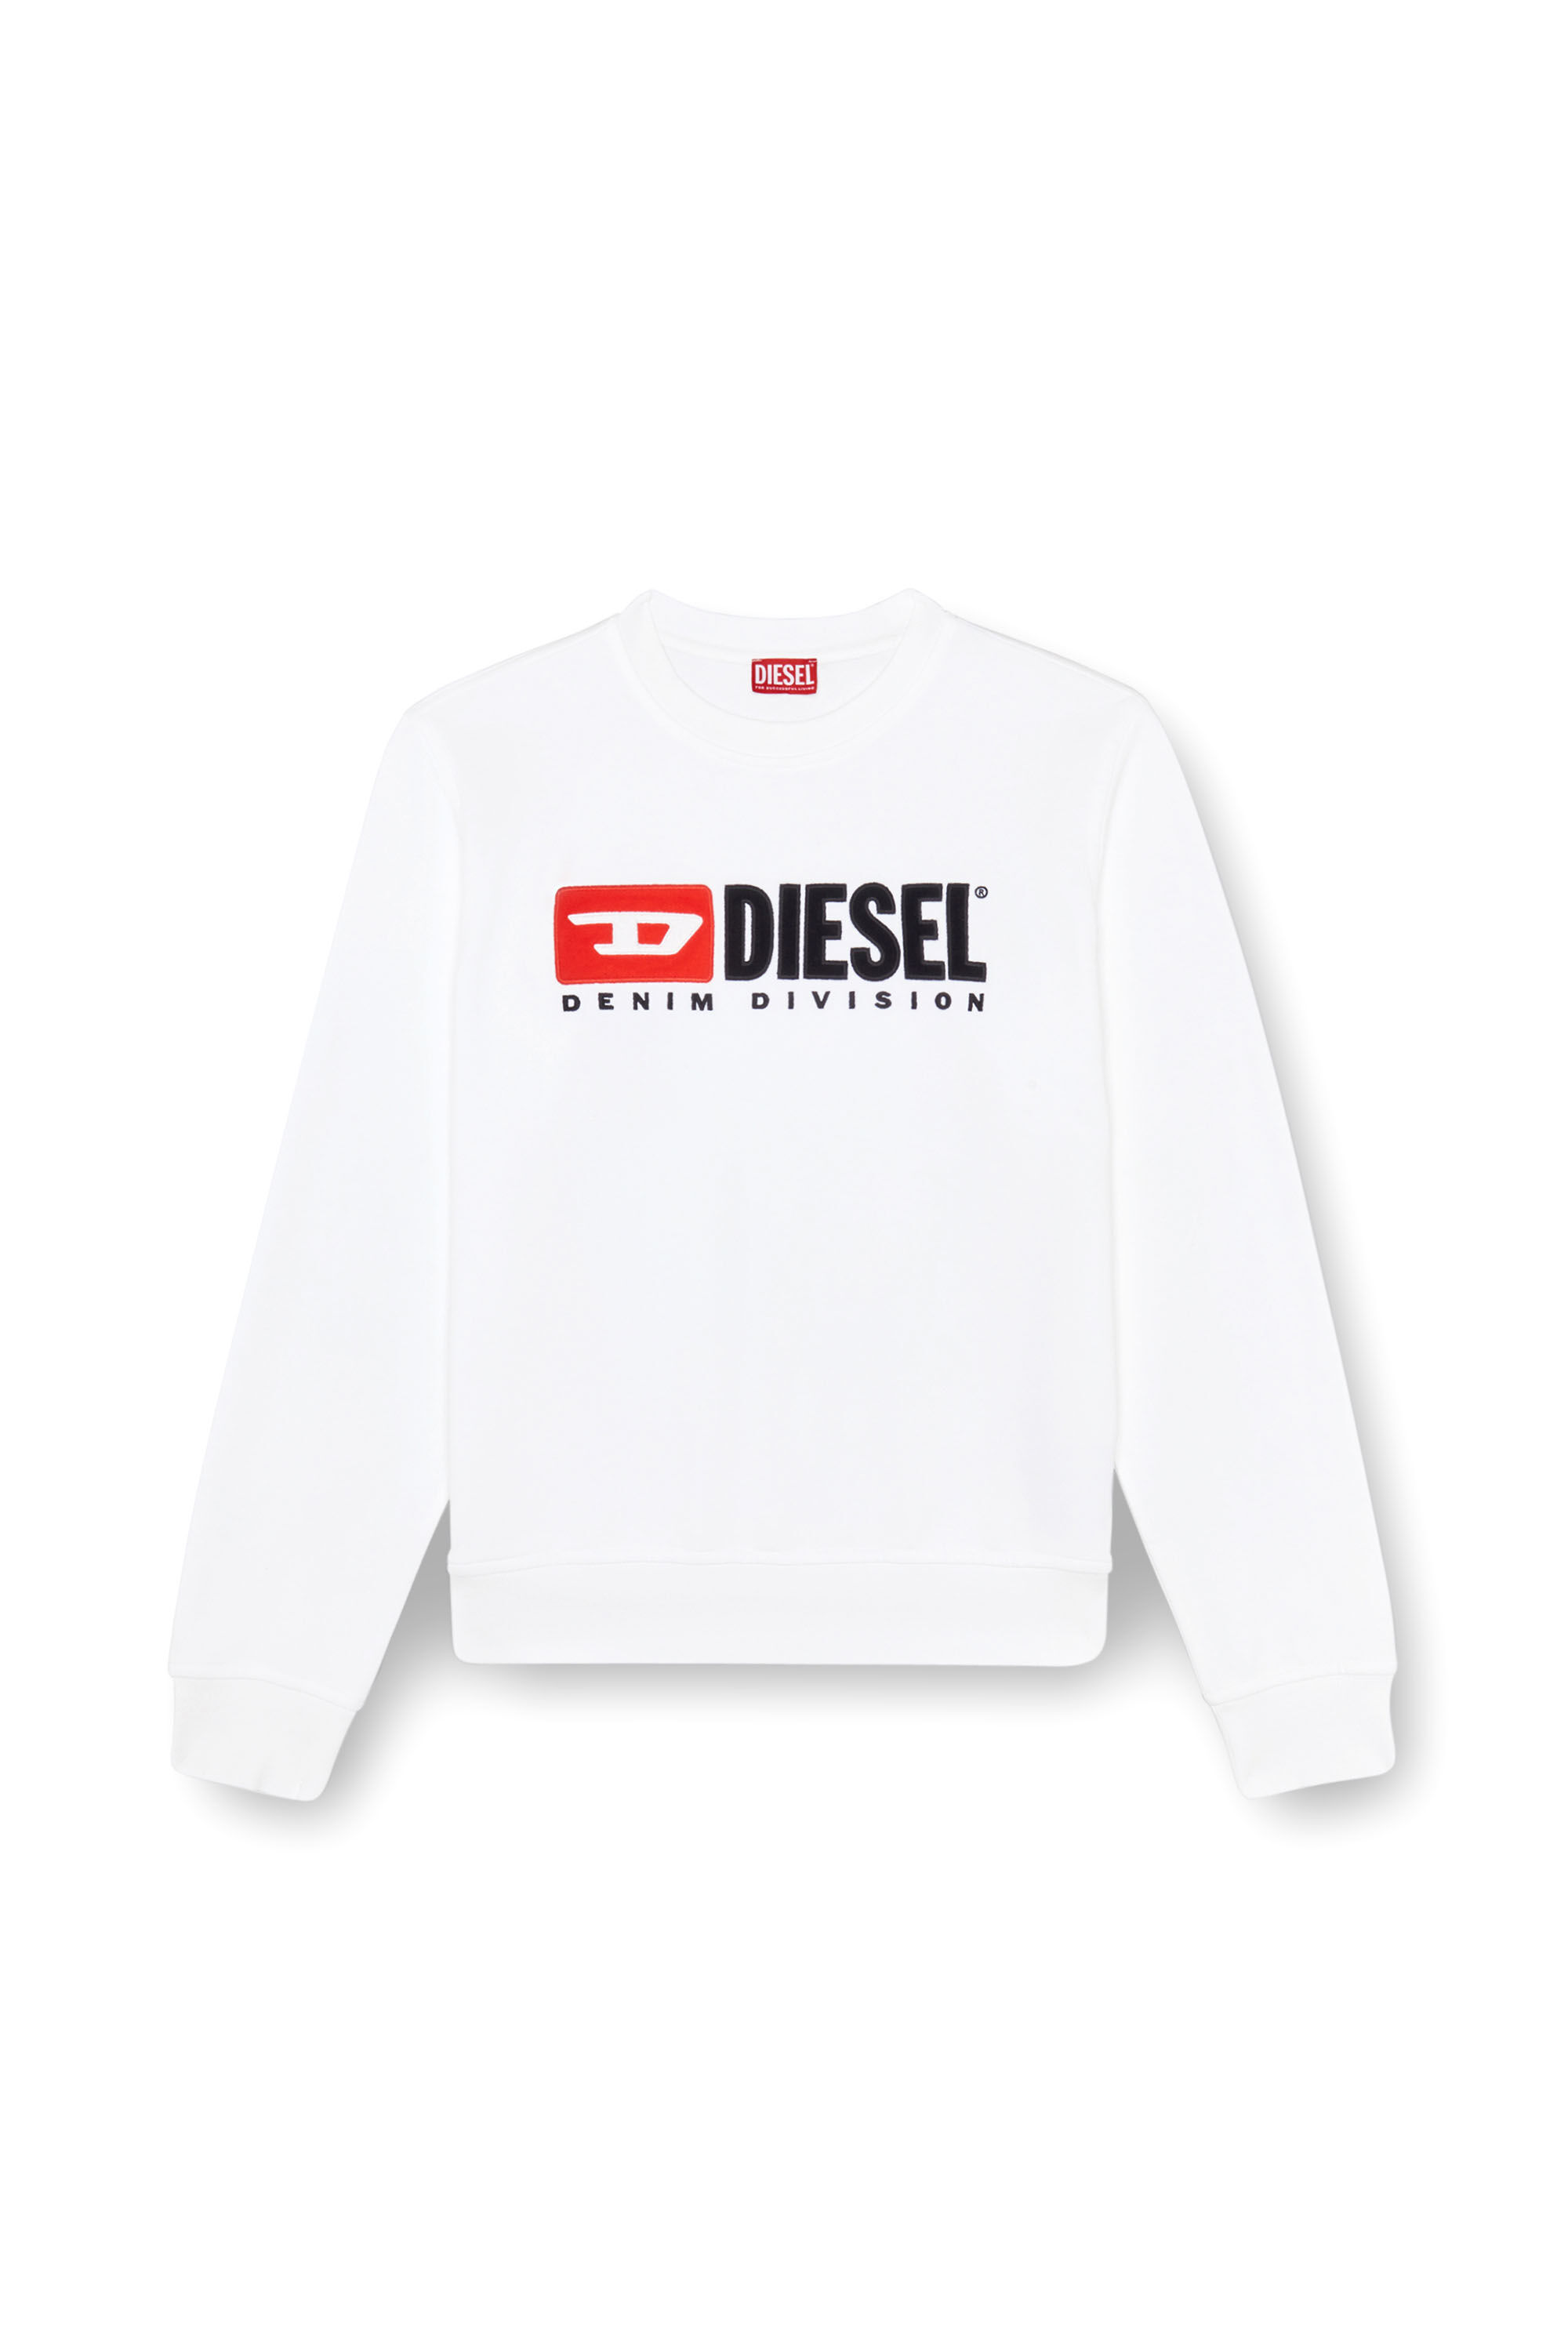 Diesel - S-BOXT-DIV, Homme Sweat-shirt avec logo Denim Division in Blanc - Image 2